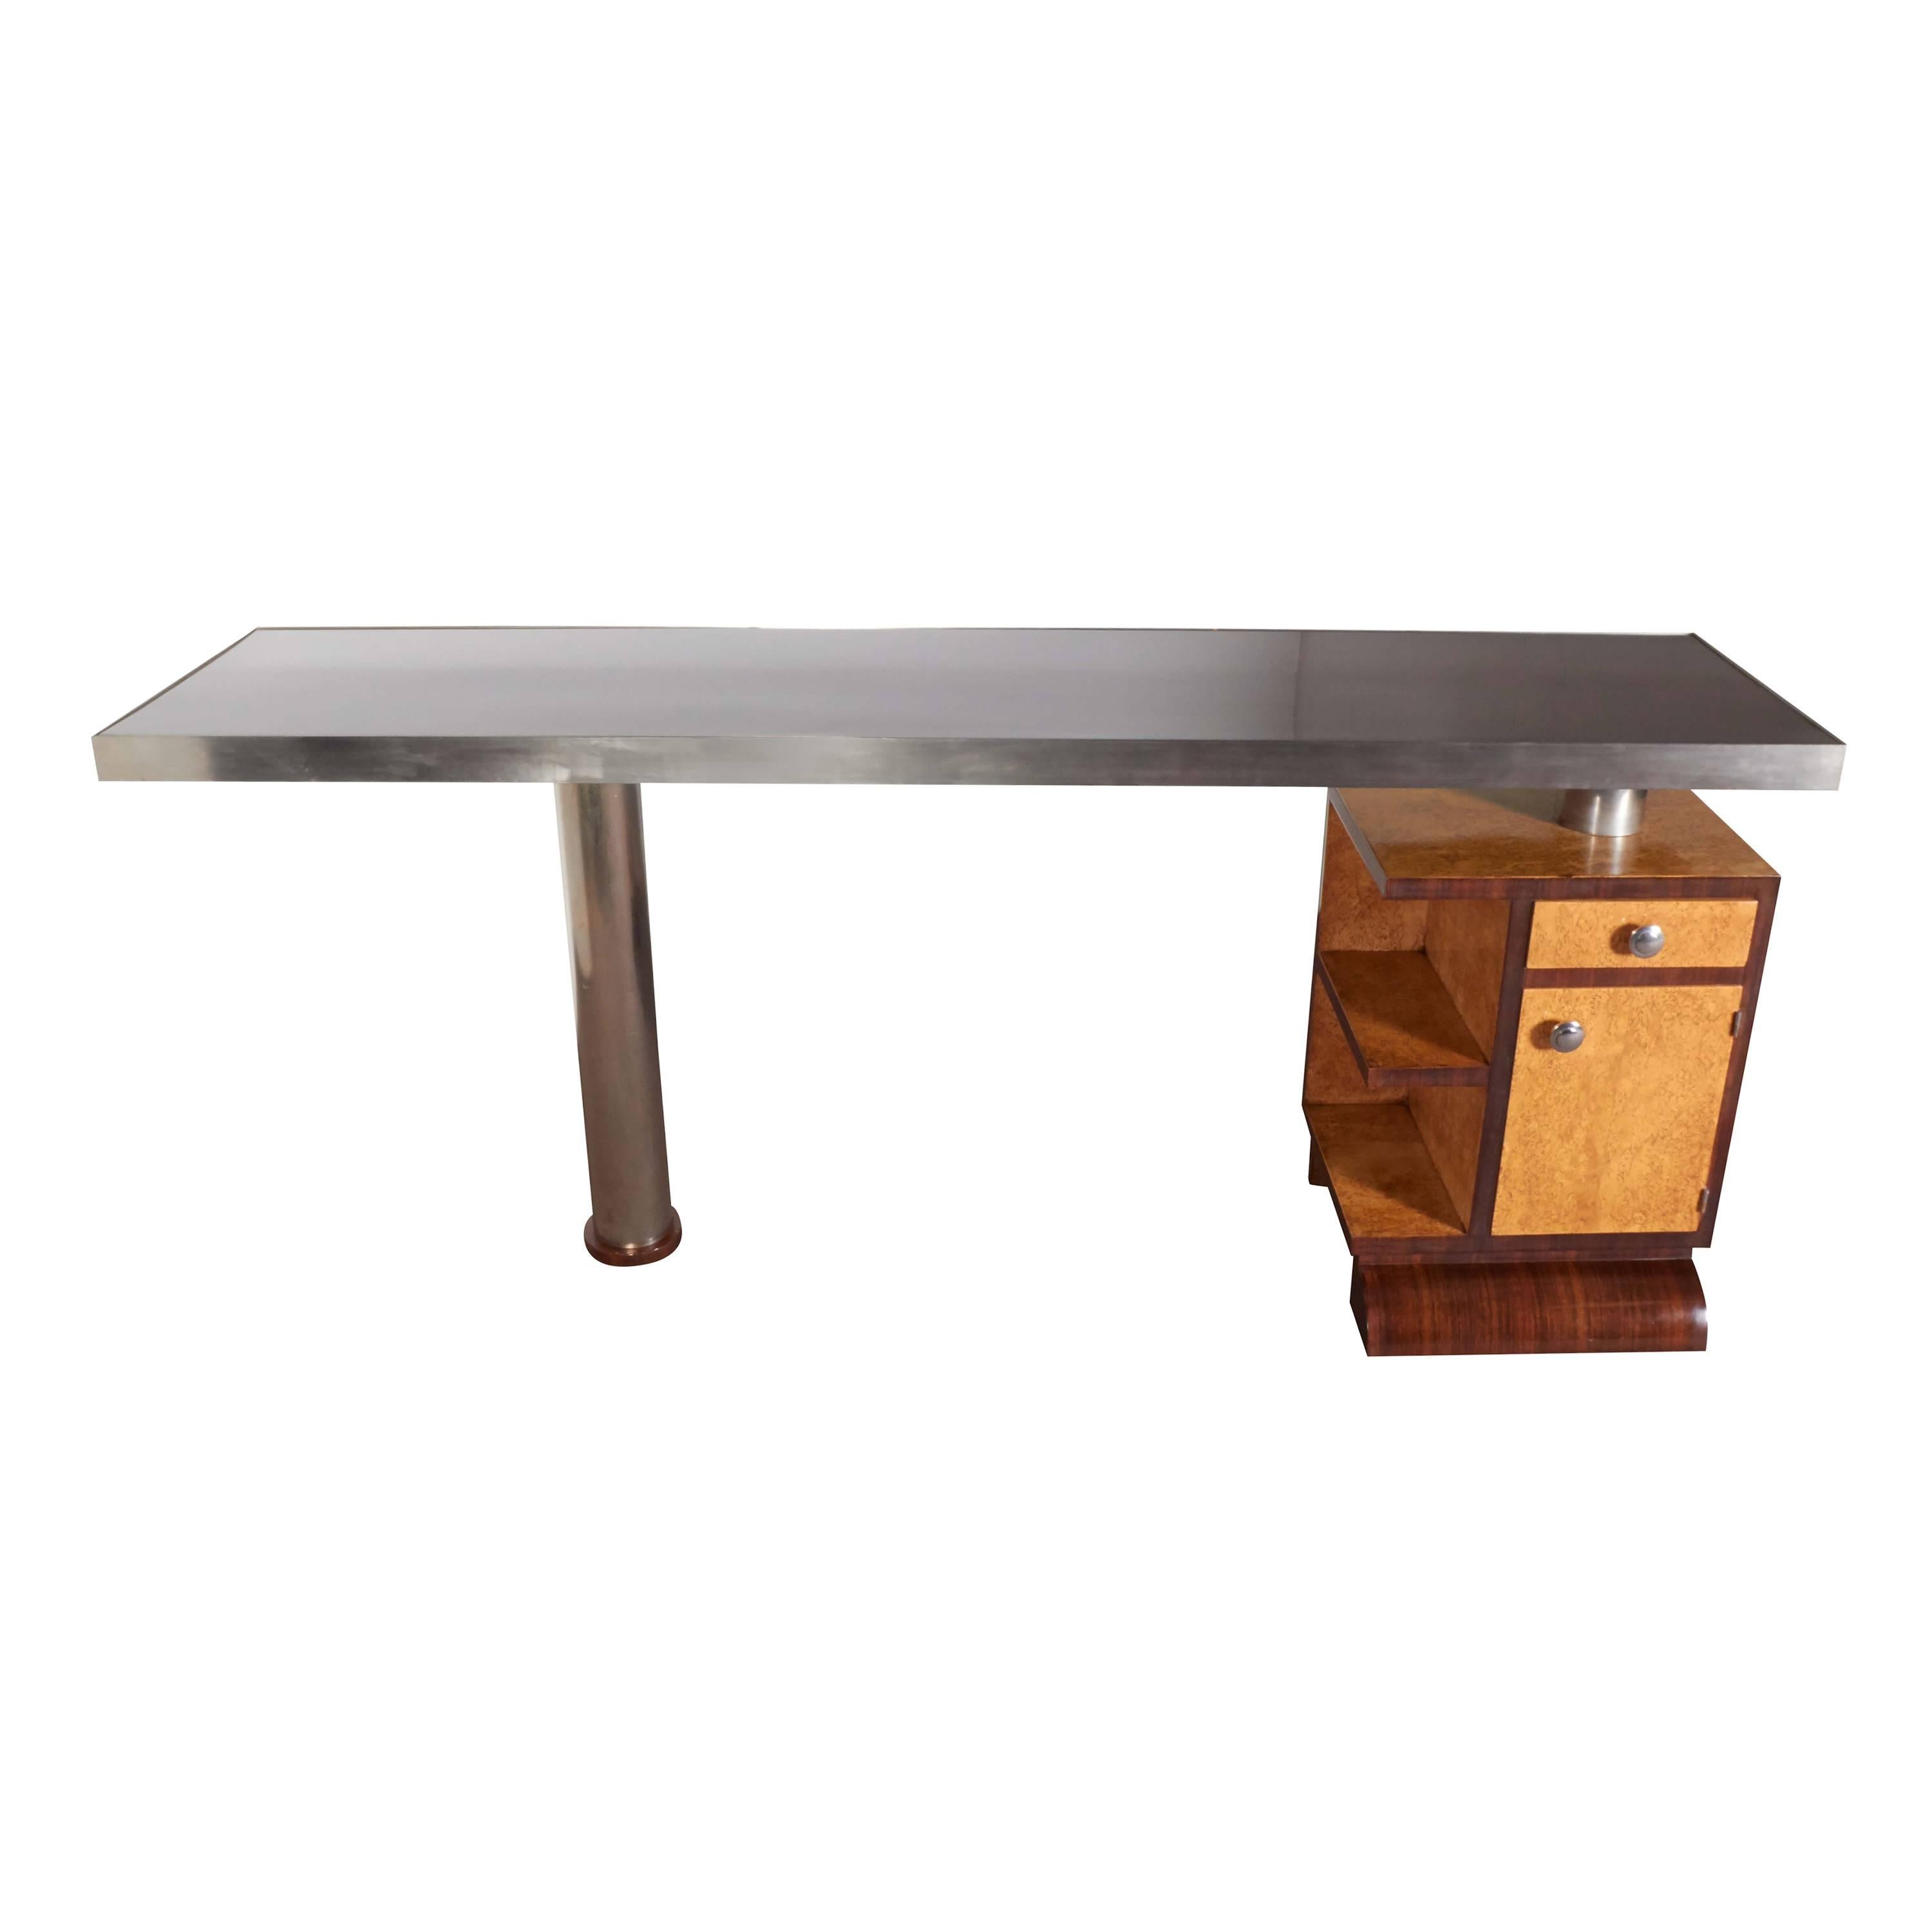 Narrow modular/ reversible/ Minimalist Desk in Two Tone Wood and Nickel